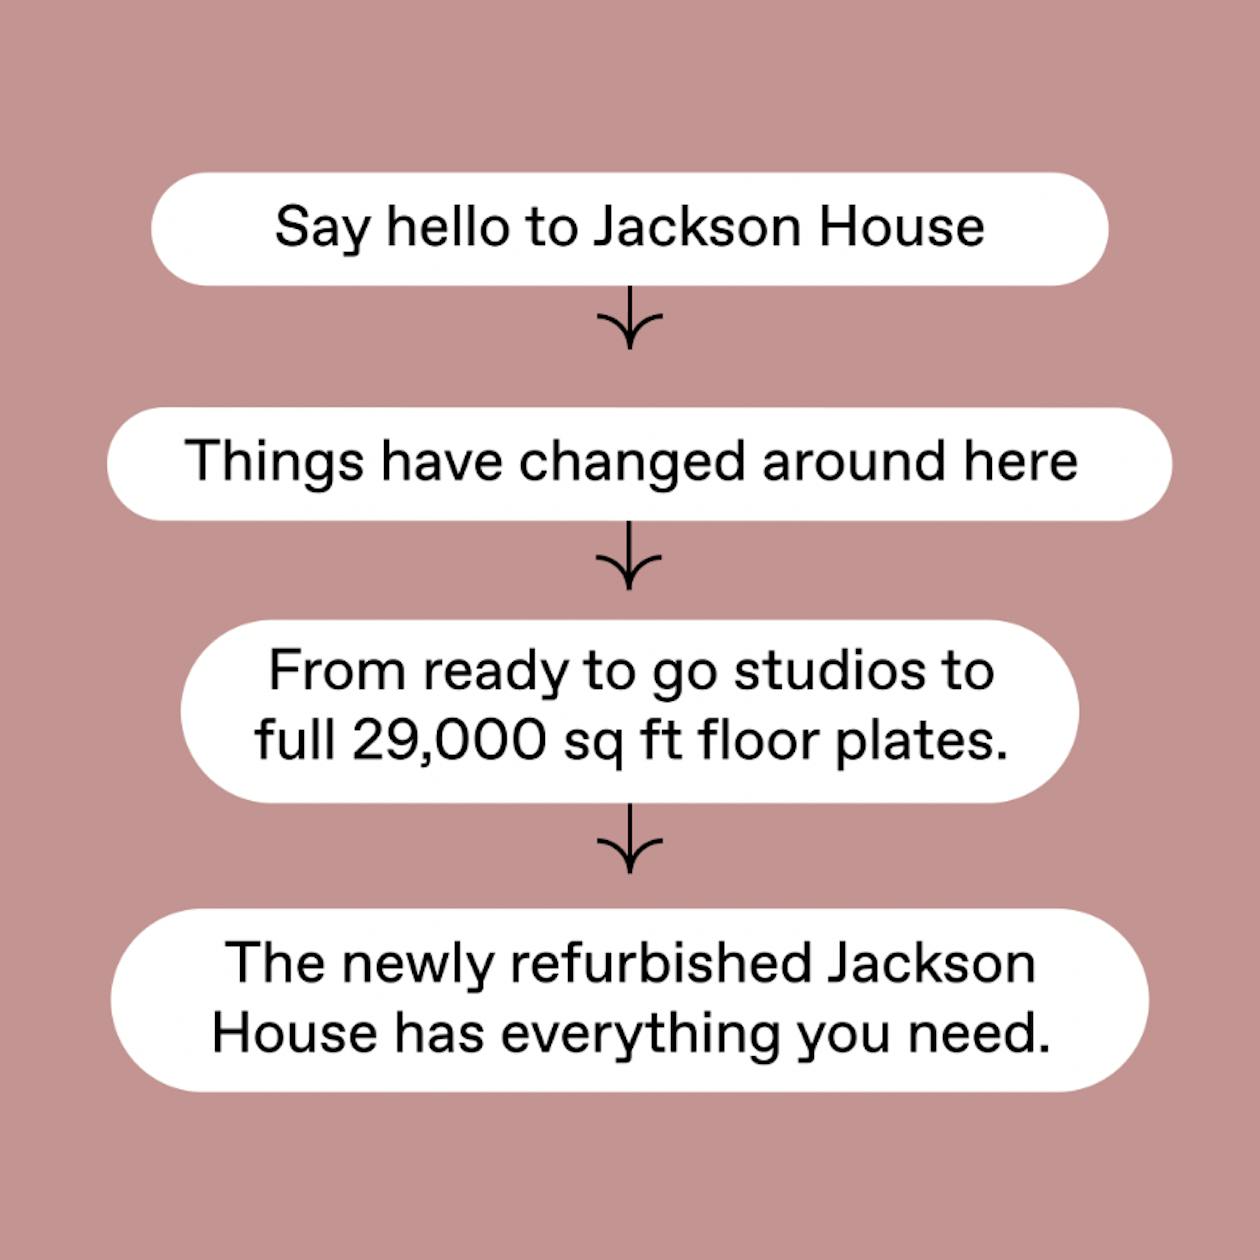 Jackson house introduction text, "Say hello to Jackson House"